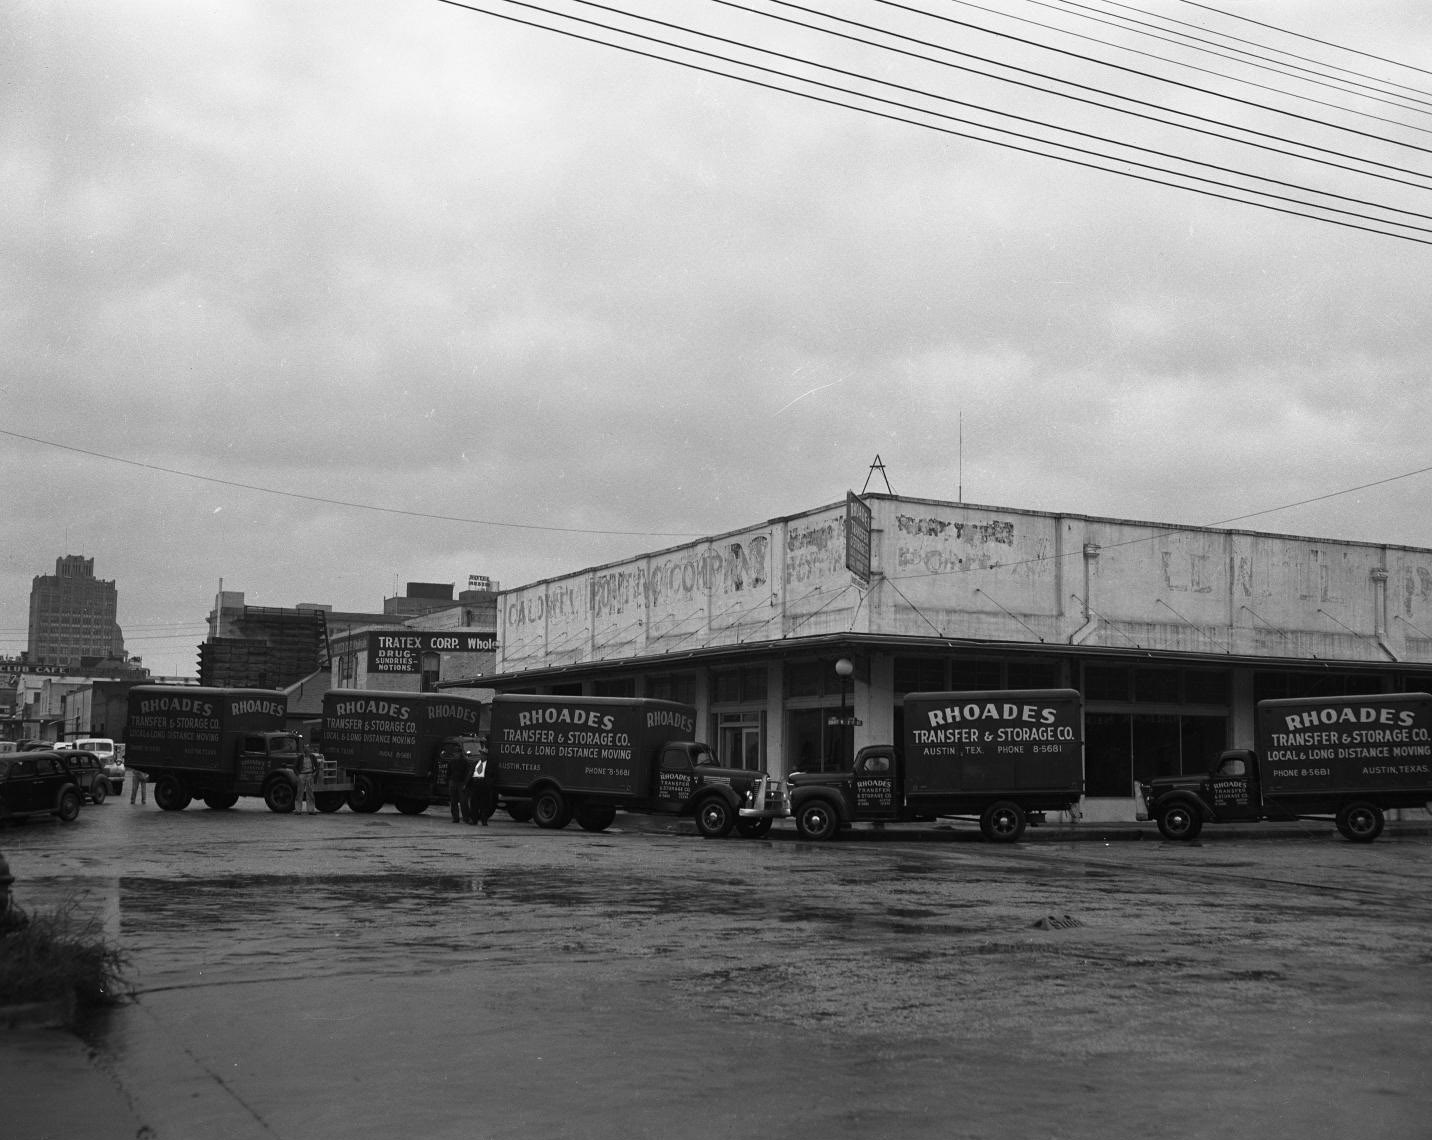 Rhoades Transfer & Storage Equipment and Staff, 1950.